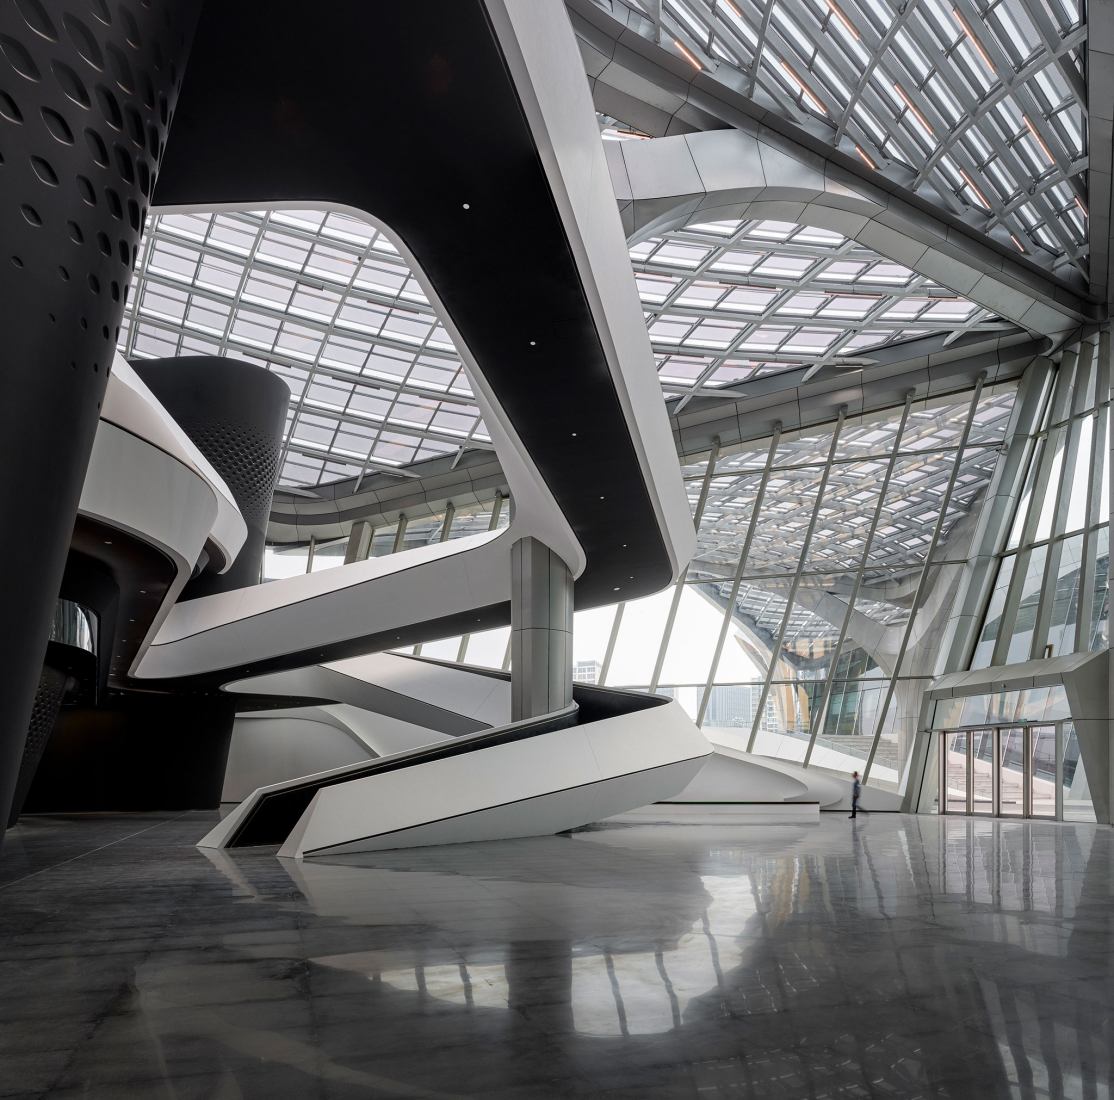 Zhuhai Jinwan Civic Art Centre by Zaha Hadid Architects. Photograph by Virgile Simon Bertrand.